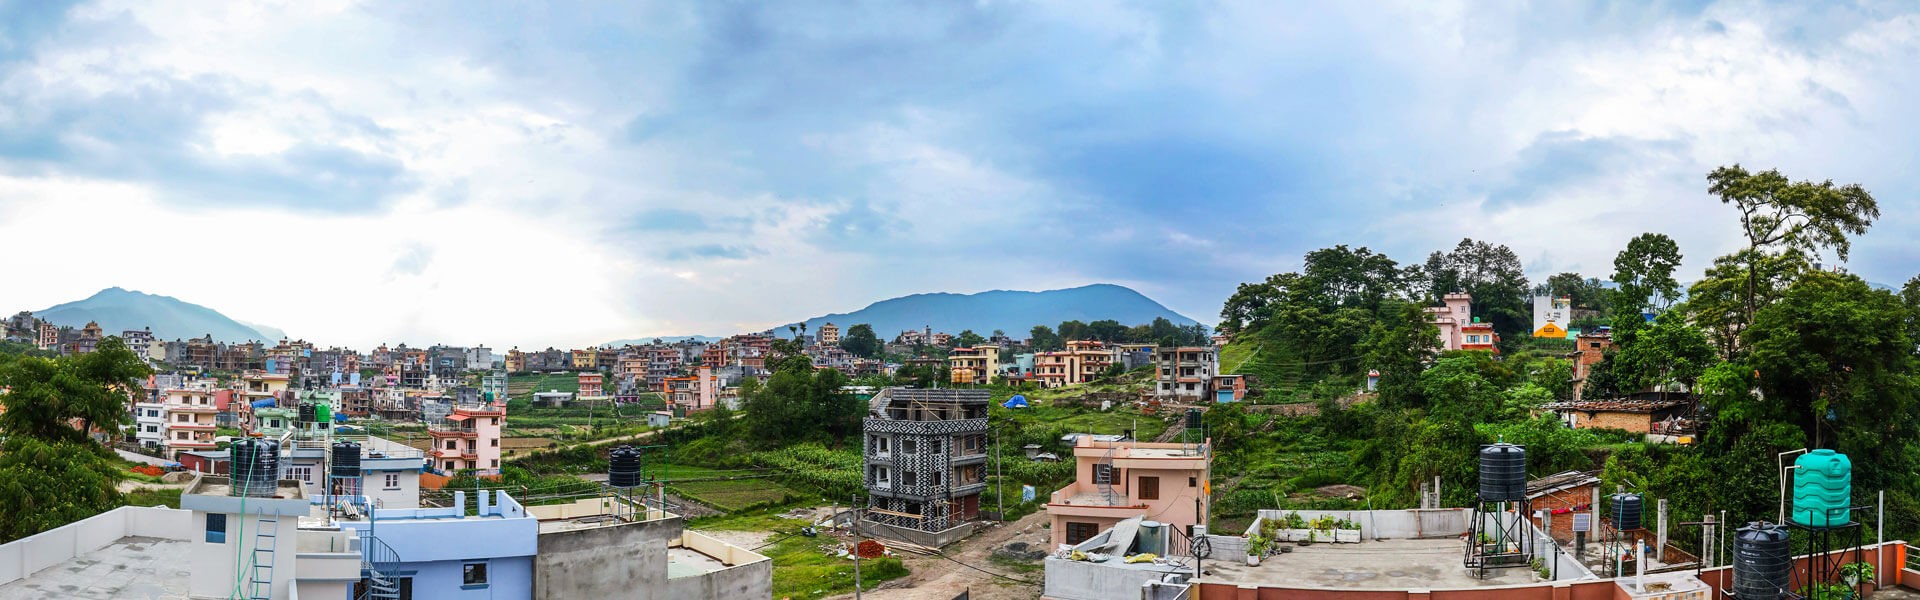 Tokha, Kathmandu